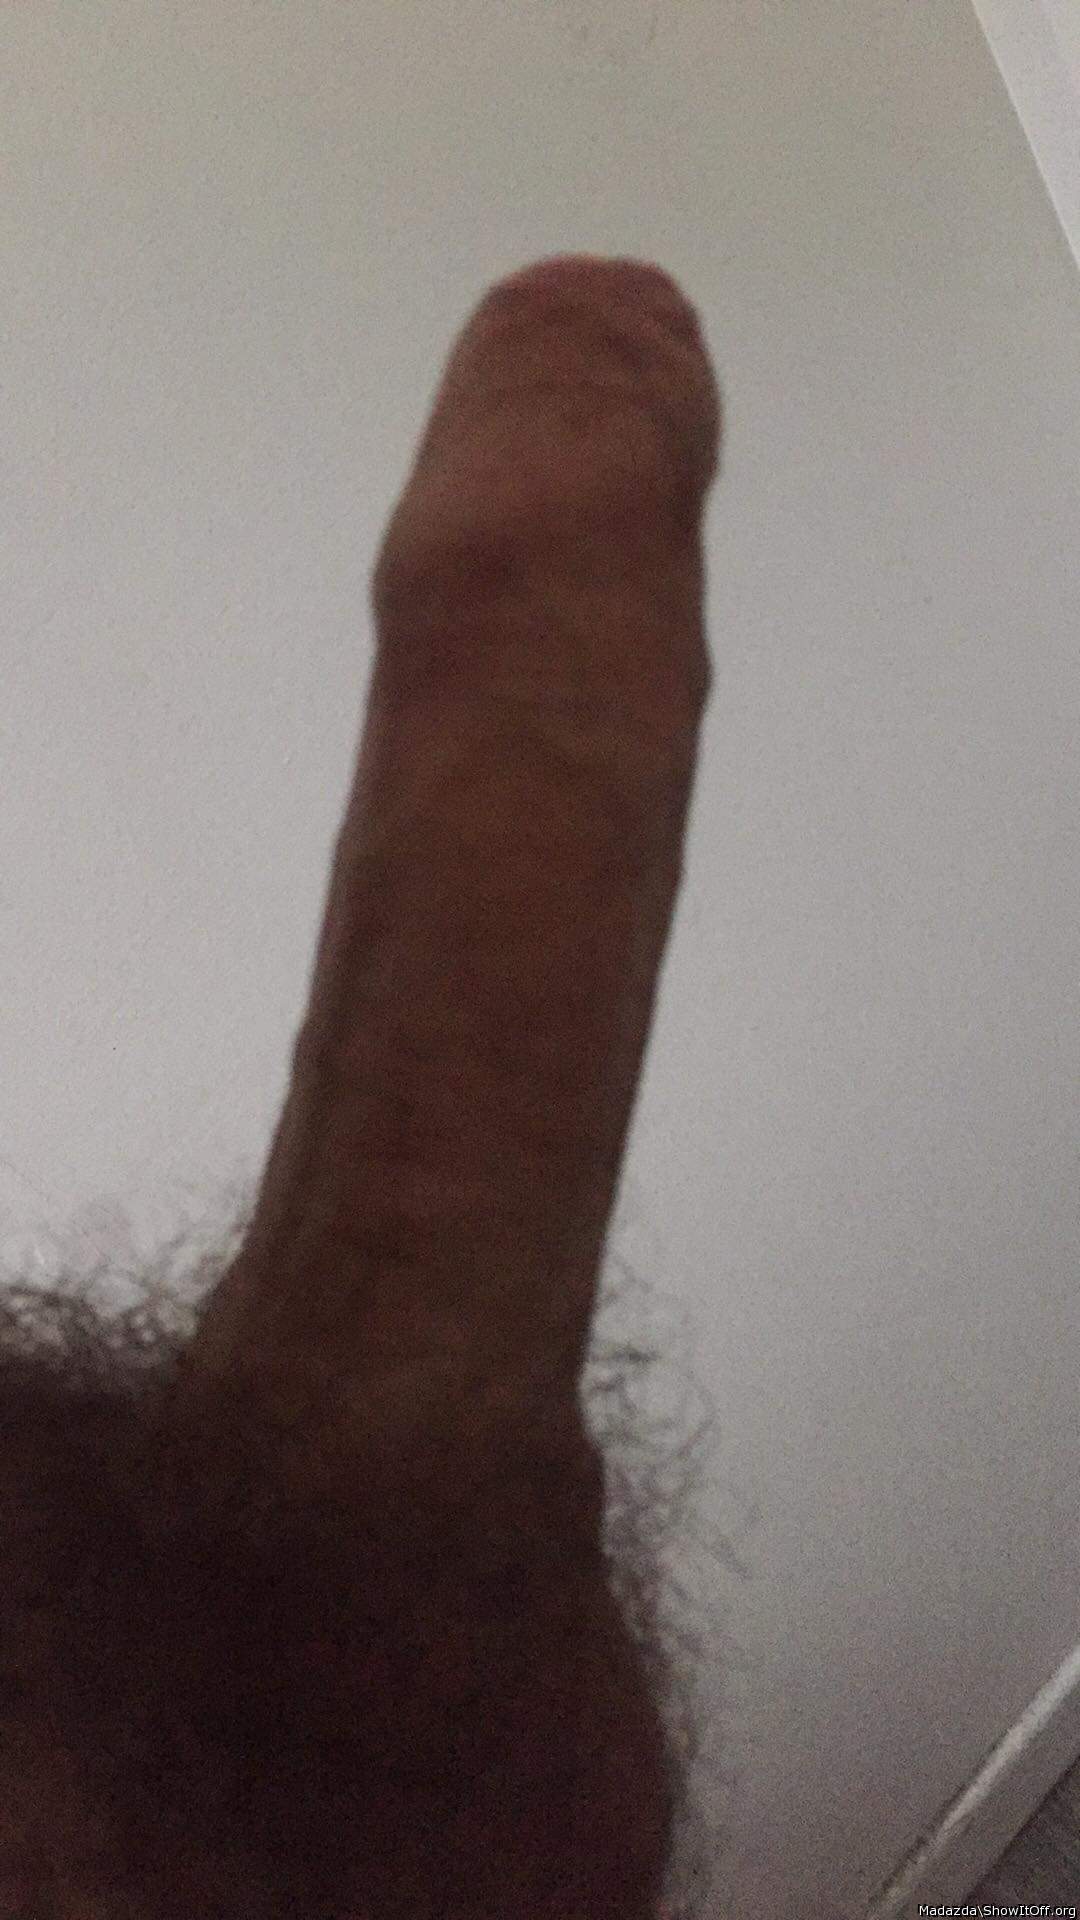 Photo of a boner from Madazda